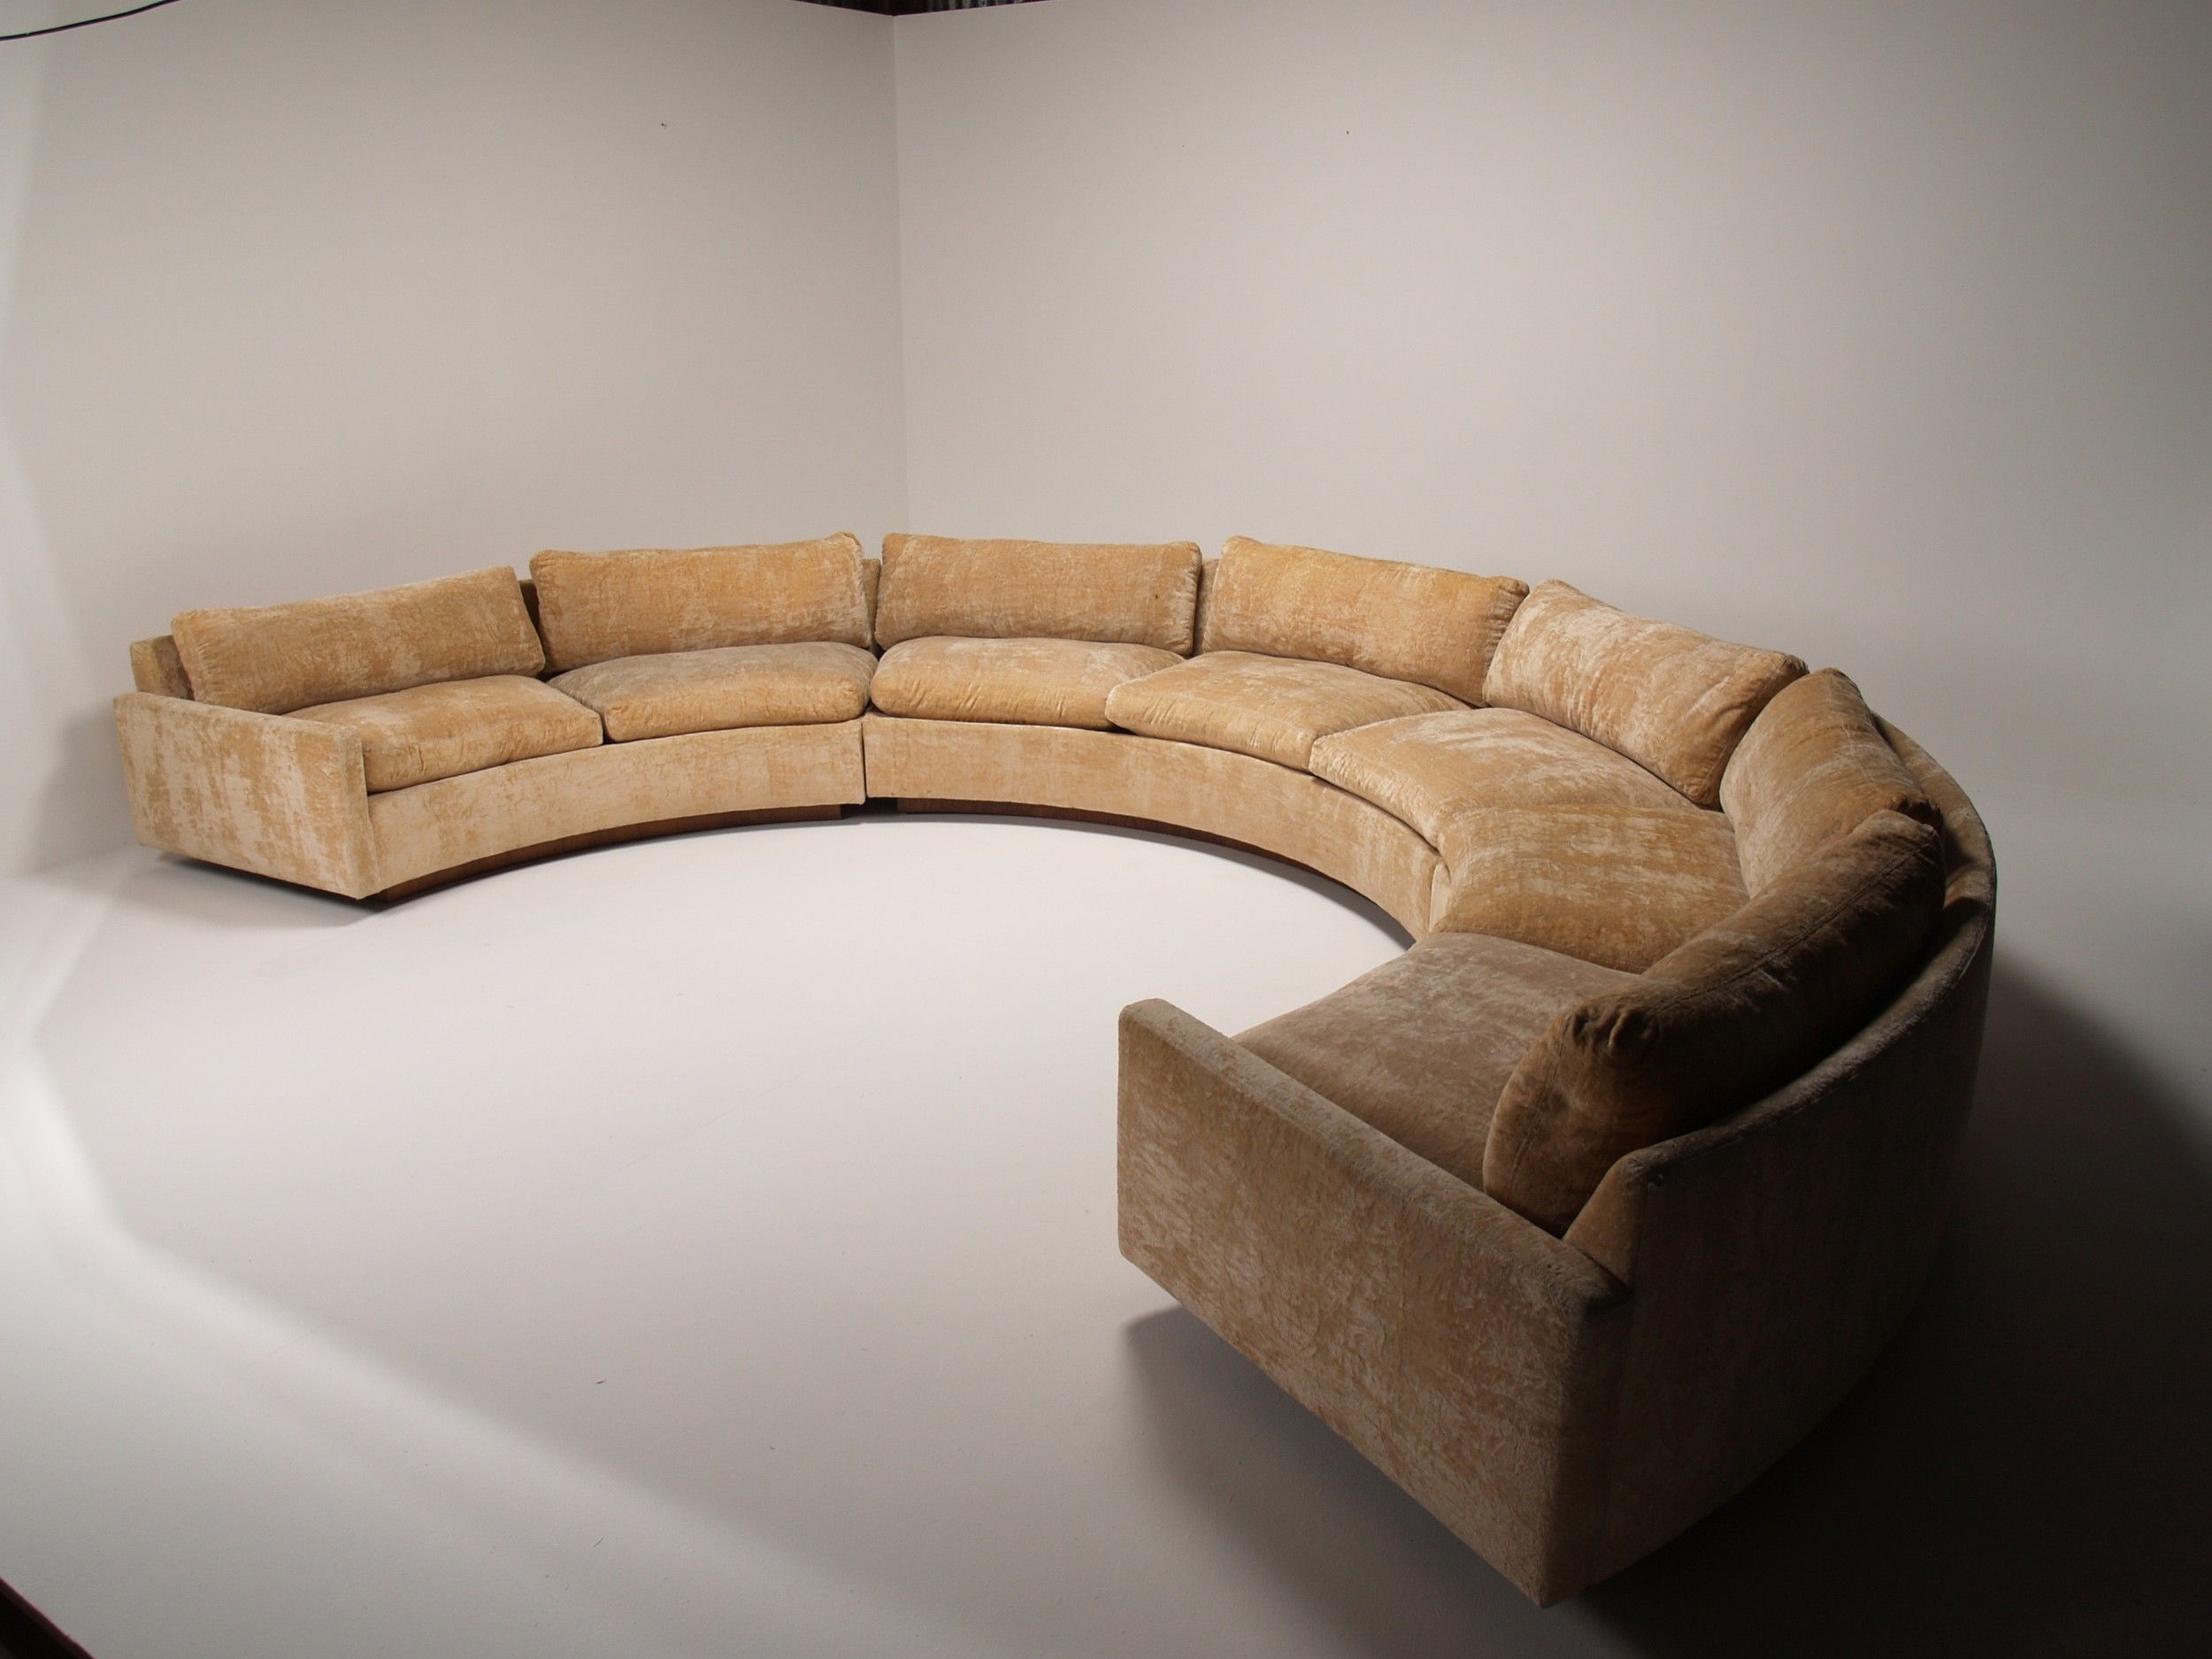 Fabulous Ccdeeaefeccedc Has Cool Sofa Ideas On Home Design Ideas Regarding Cool Sofa Ideas (View 2 of 12)